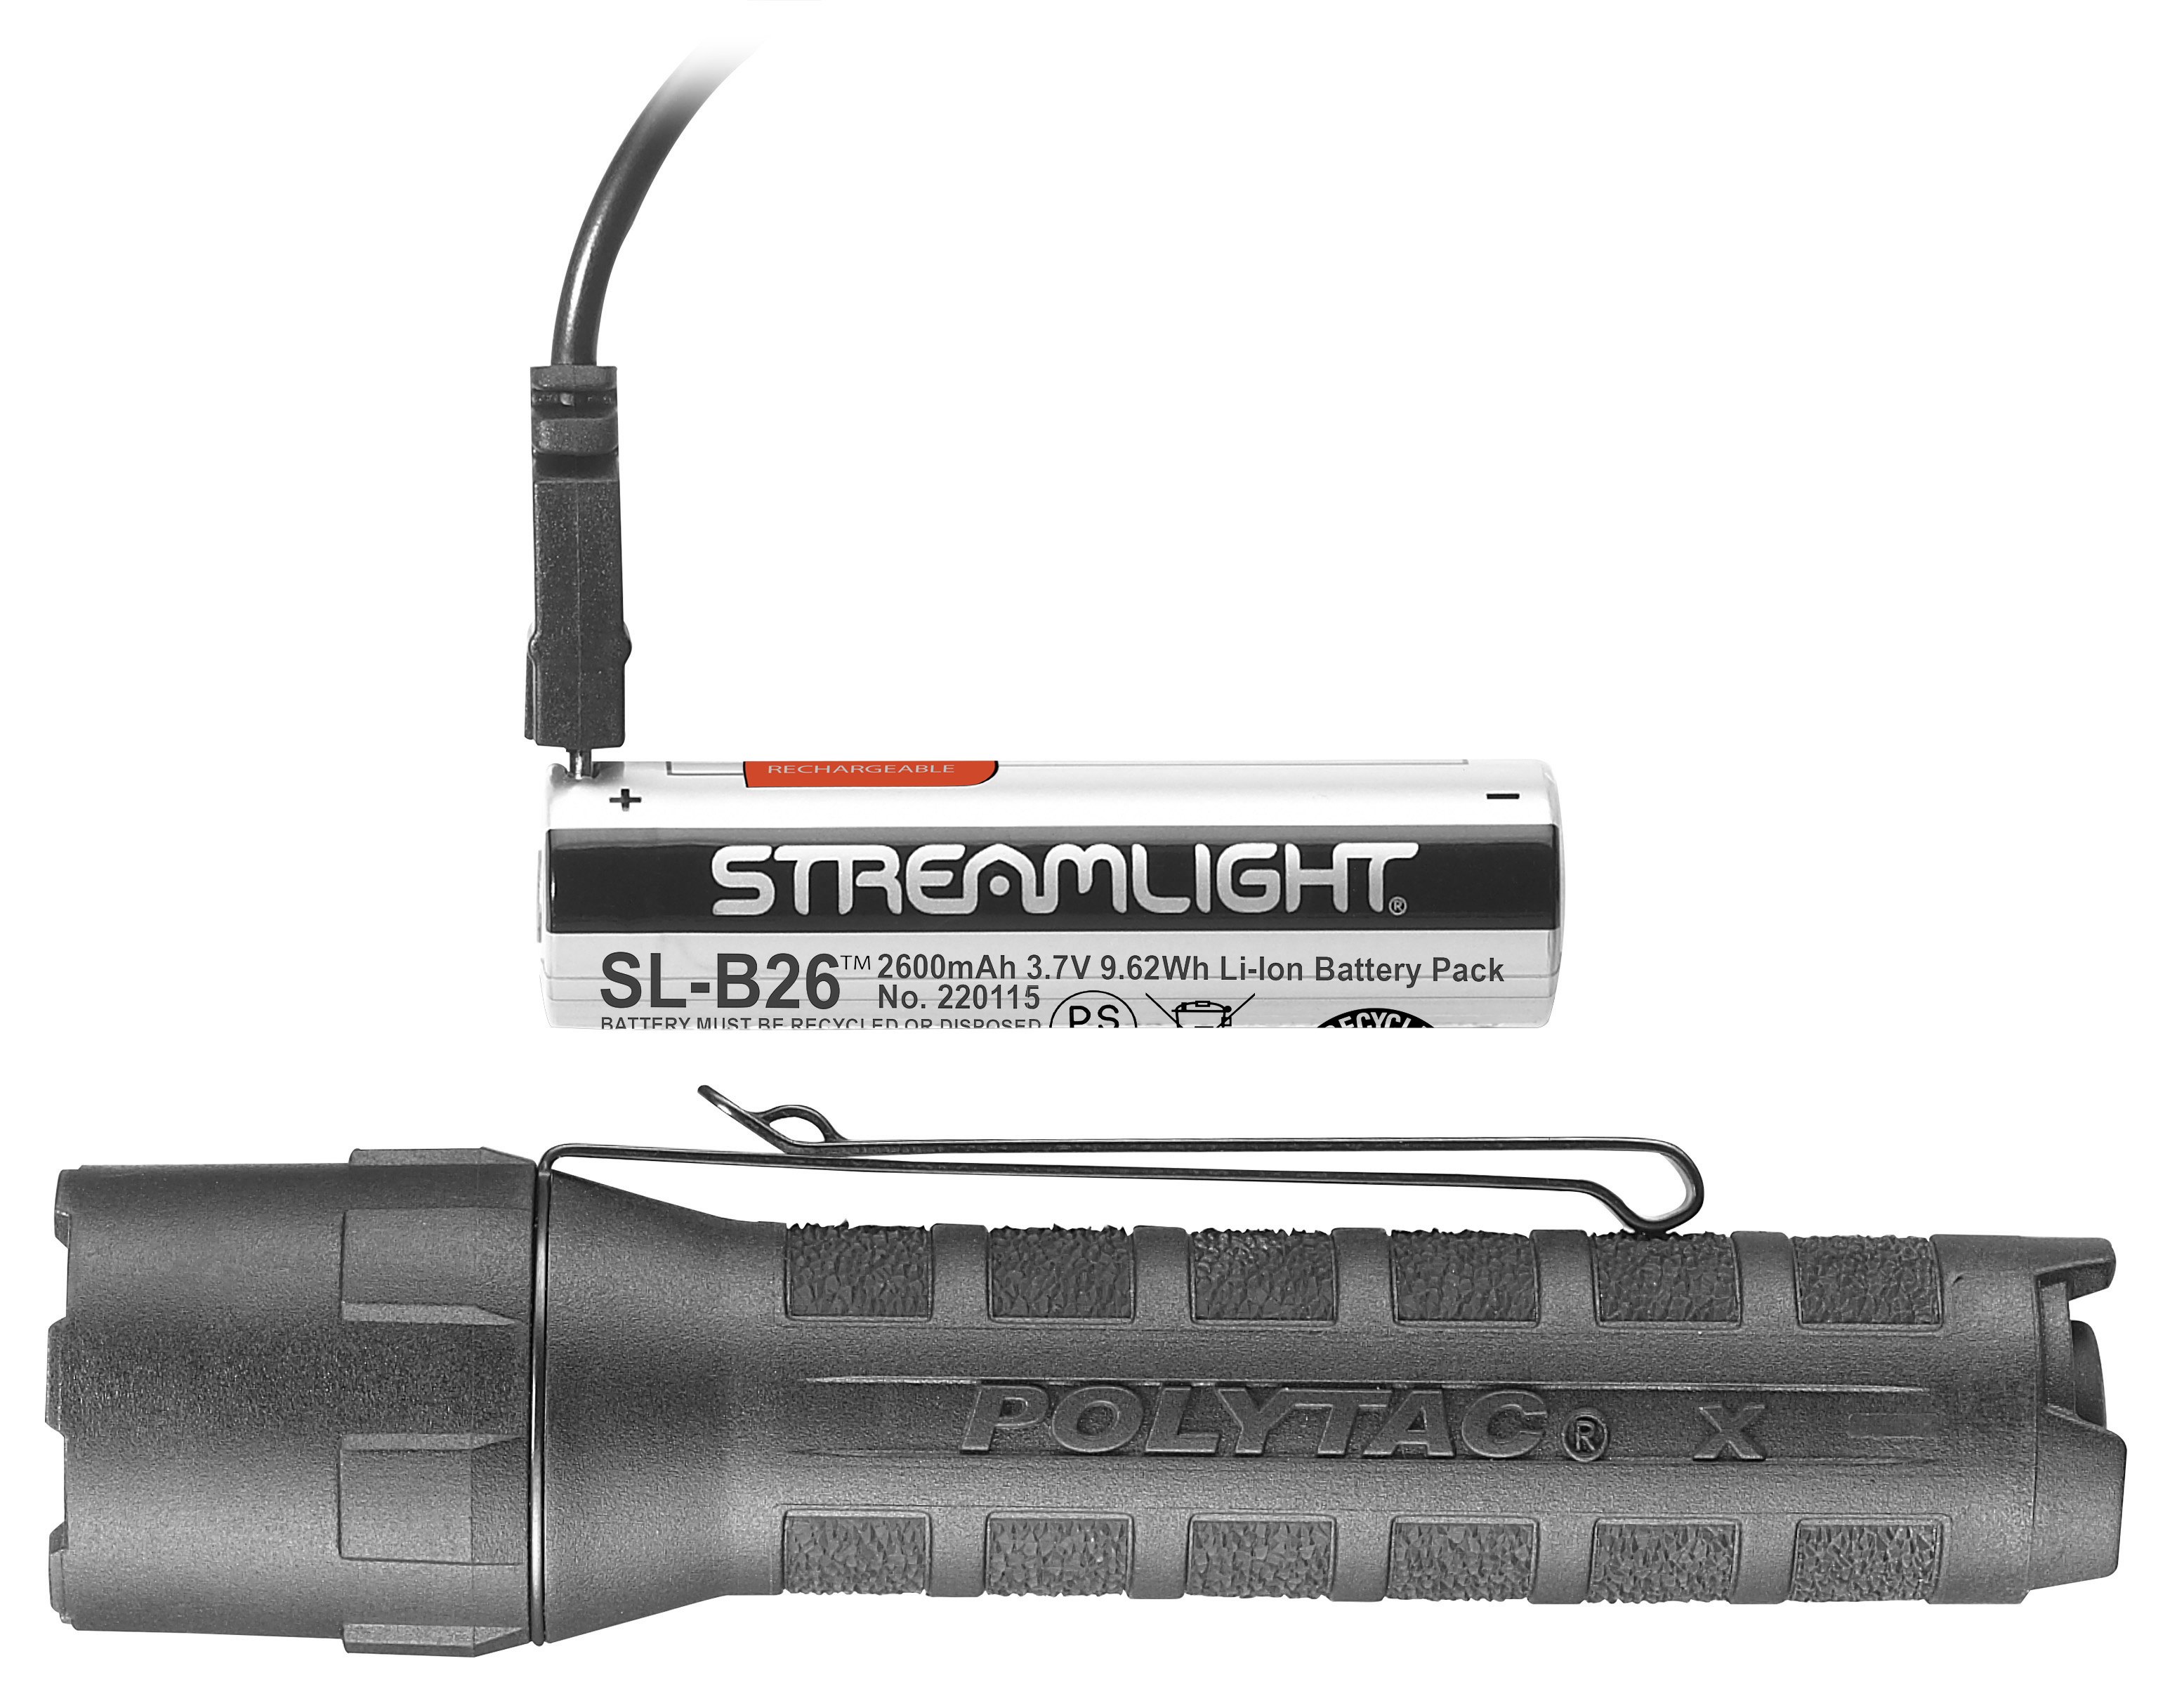 Streamlight 88603 Black PolyTac X Dual Fuel LED 600 Lumen Tactical Flashlight for sale online 